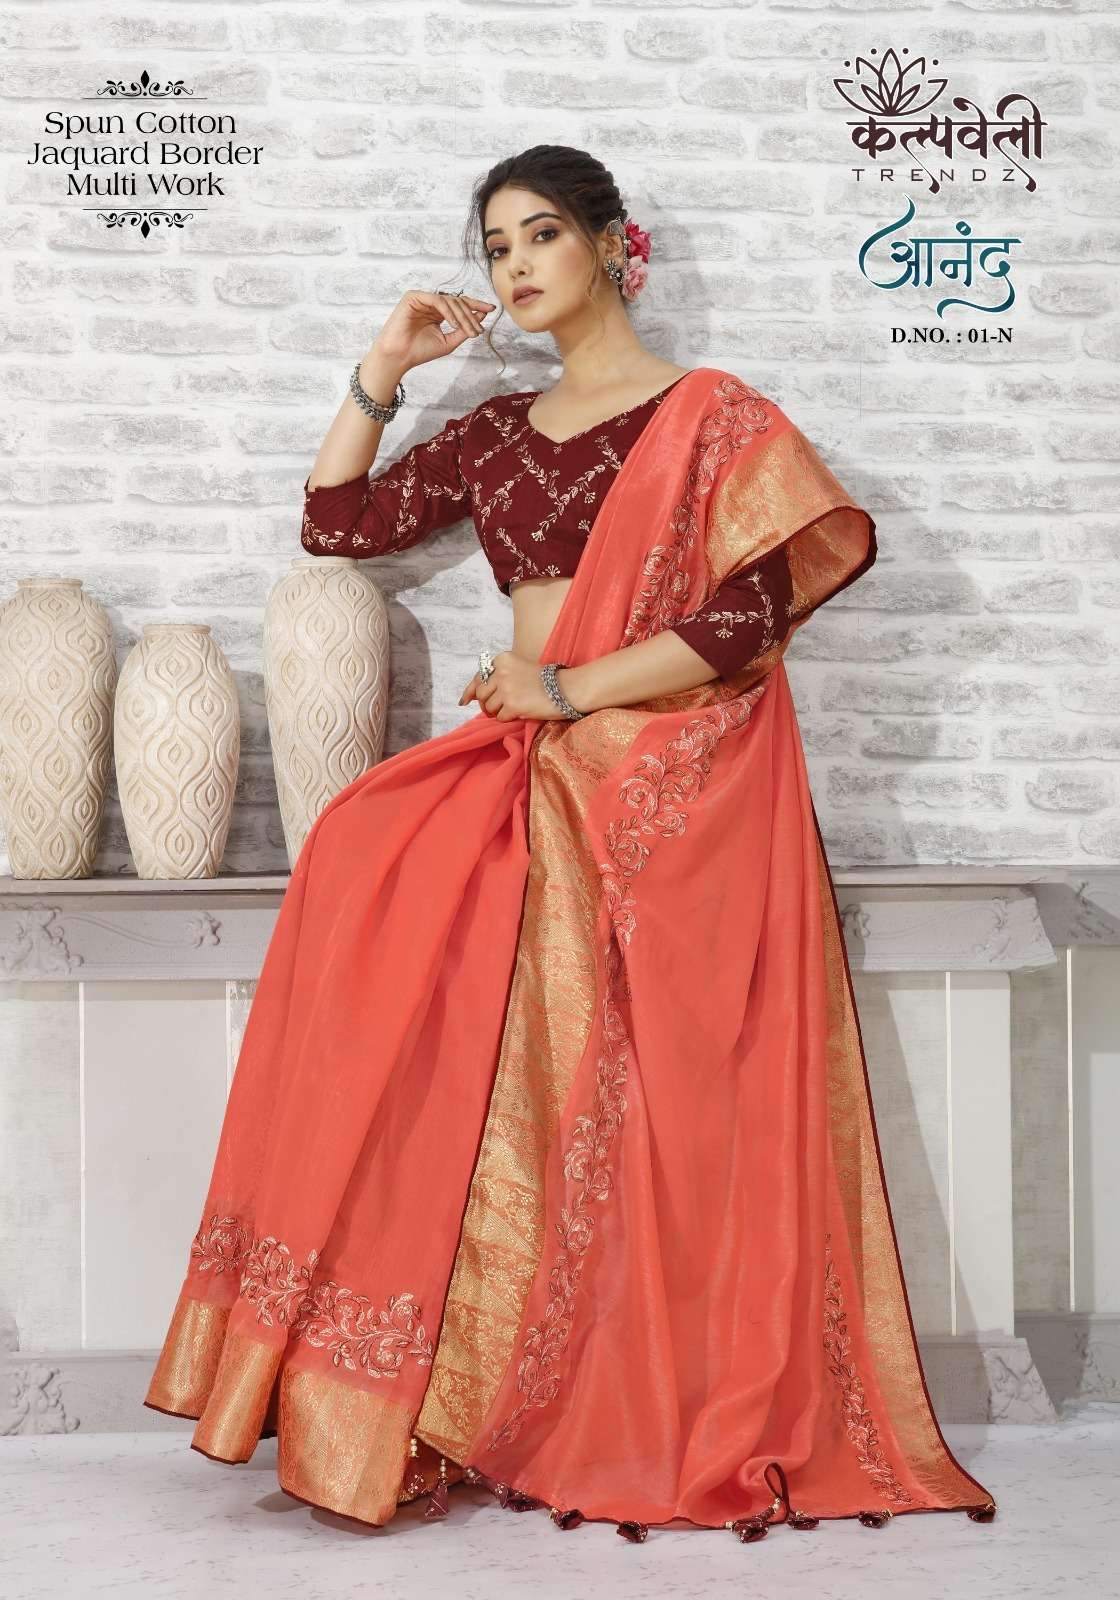 kalpavelly trendz anand 01 new color amazing spun cotton jacquard border saree wholesaler